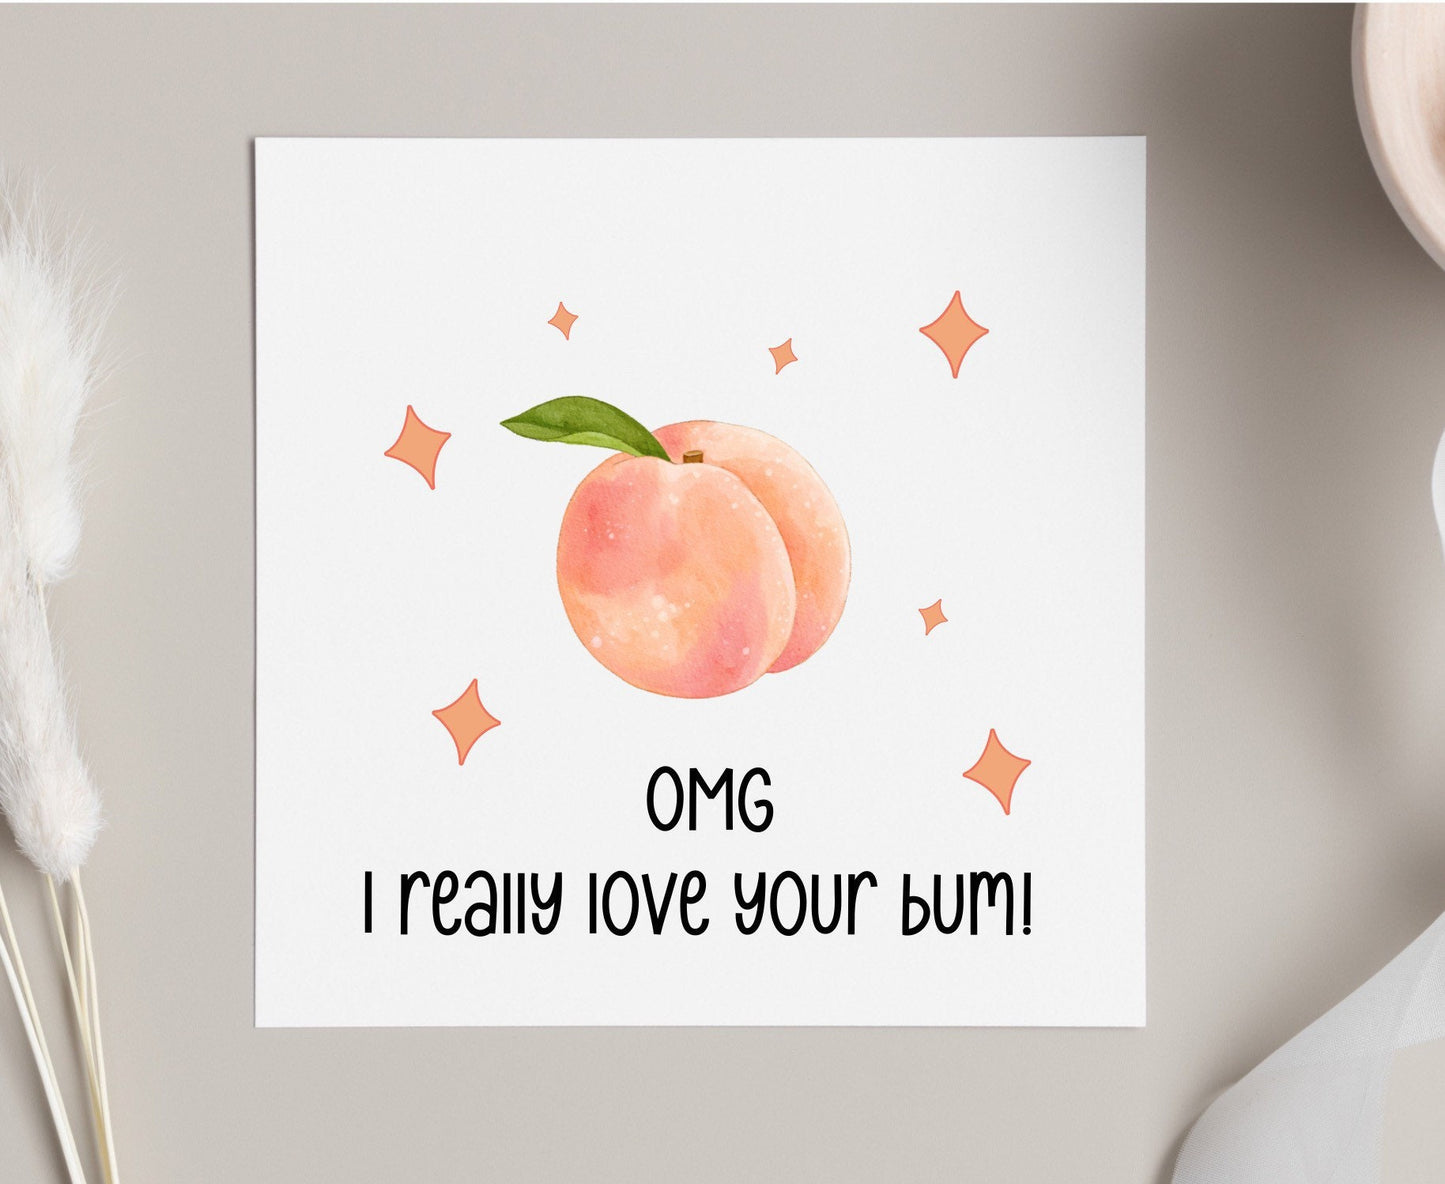 Omg I love your bum, novelty cards, LGBTQ valentines cards, gay boy birthday card, cheeky peach bum card